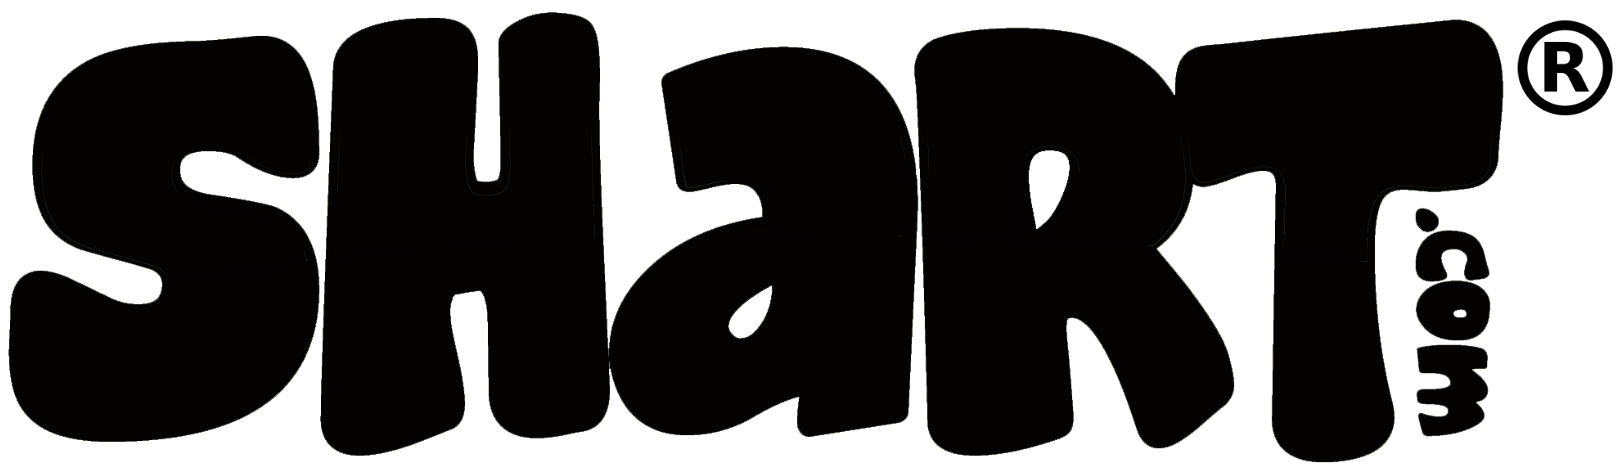 Shart.com Logo with Registered Trademark Symbol